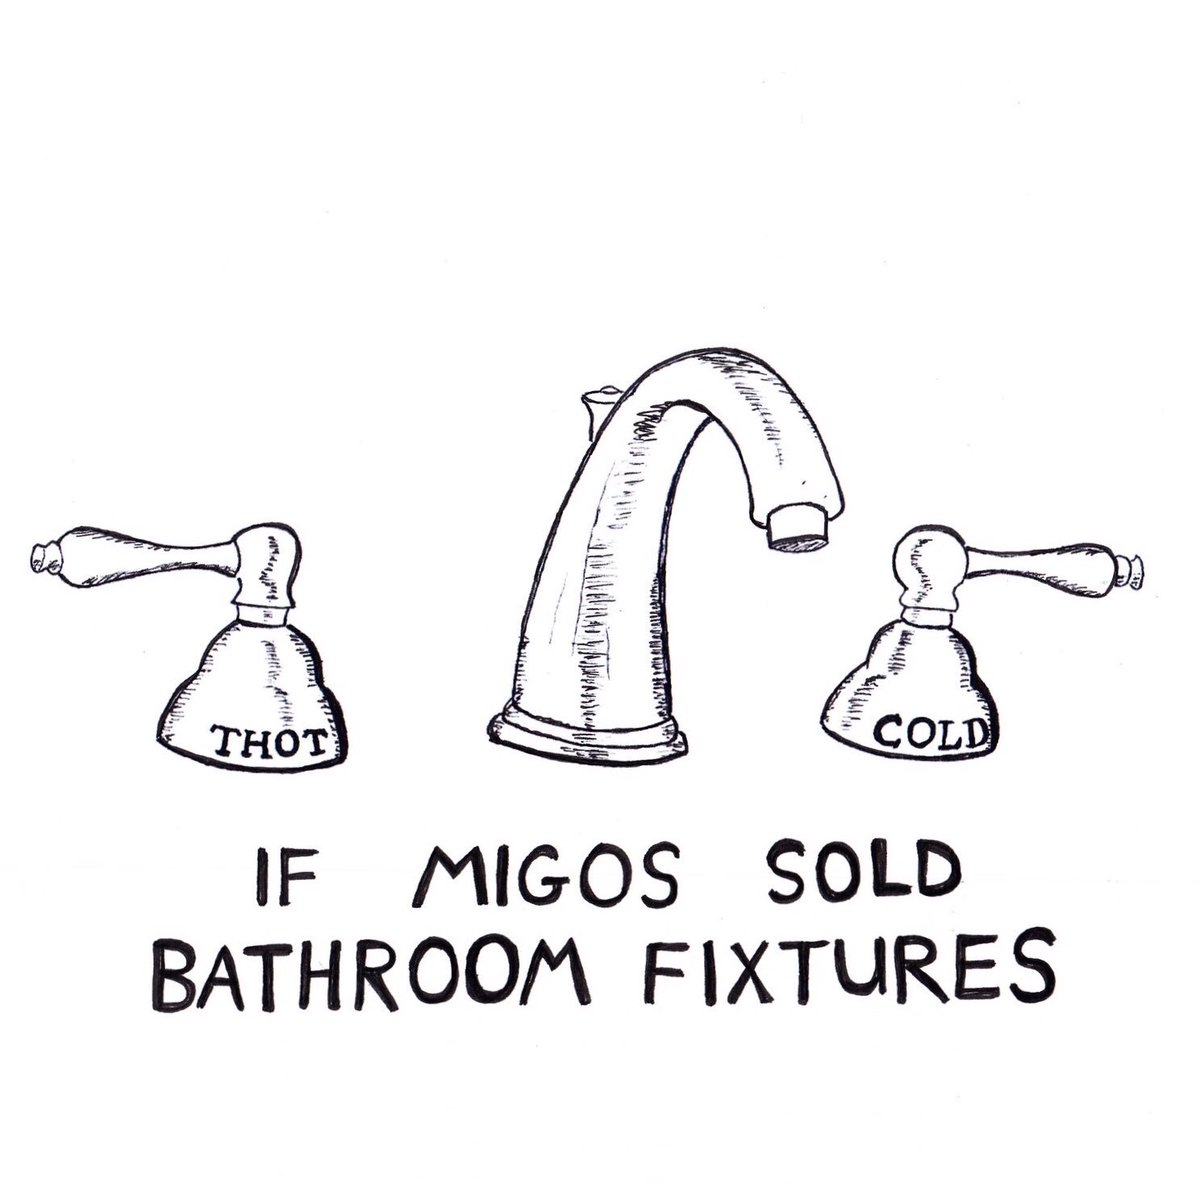 If Migos sold bathroom fixtures. #Migos #thot #thots #webcomic #bathroomfixtures #bathroomdesign #bathroomfixture #sink #faucet #thotmeme #webcomics #hiphop